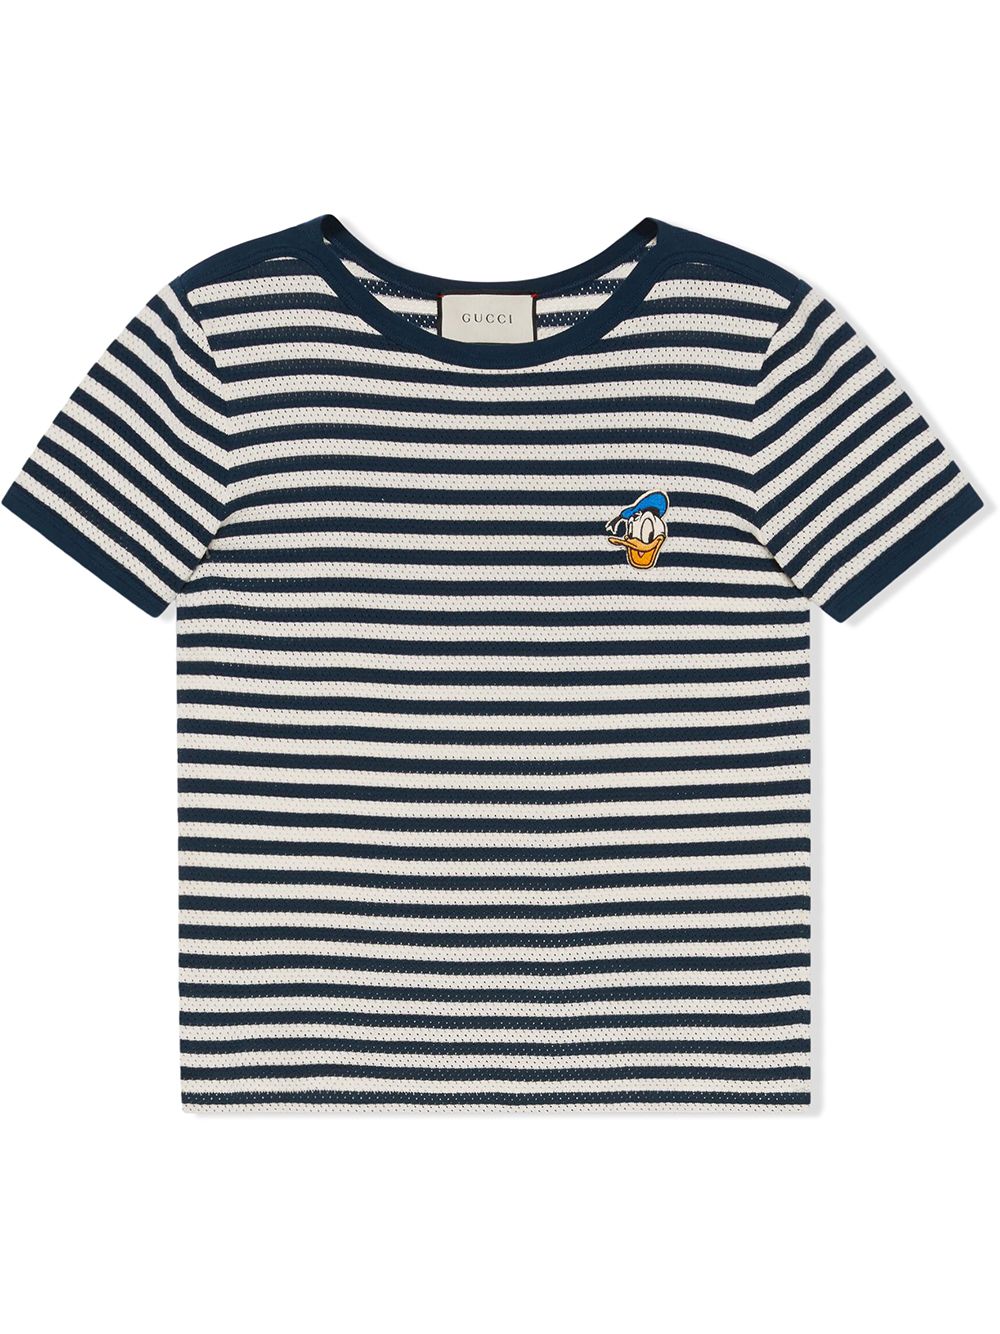 Disney Donald Duck Gucci T-shirt Parody Xxxl Run Small See Measurement Mens